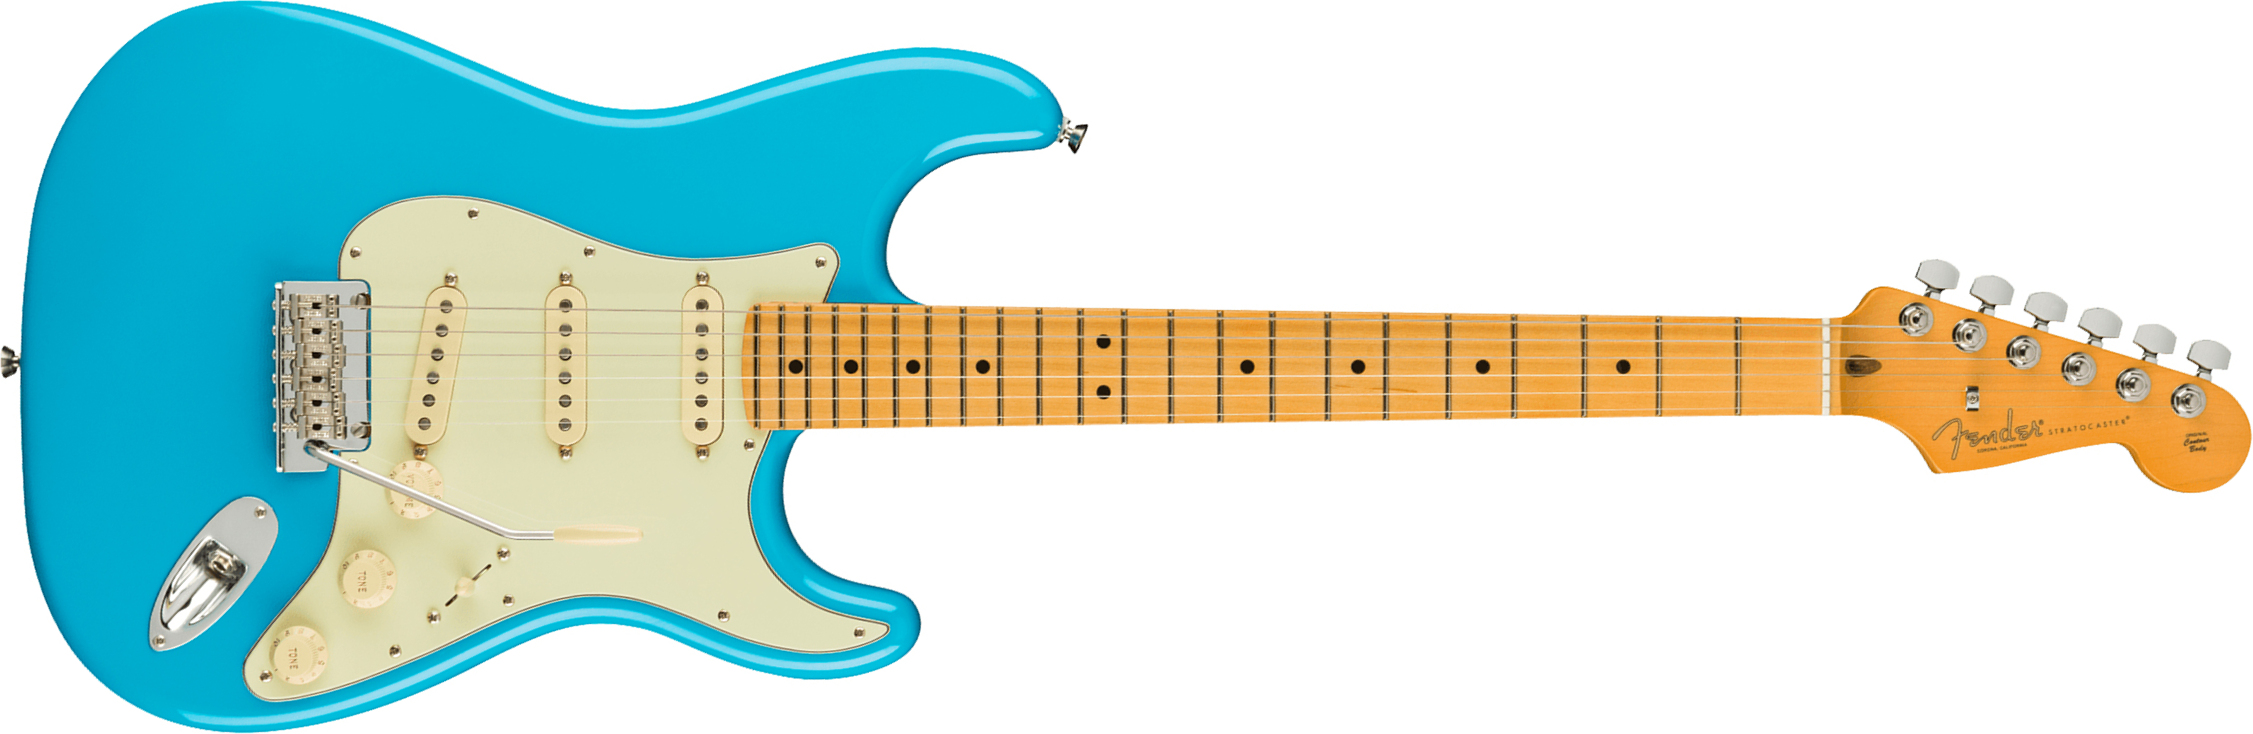 Fender Strat American Professional Ii Usa Mn - Miami Blue - Guitare Électrique Forme Str - Main picture